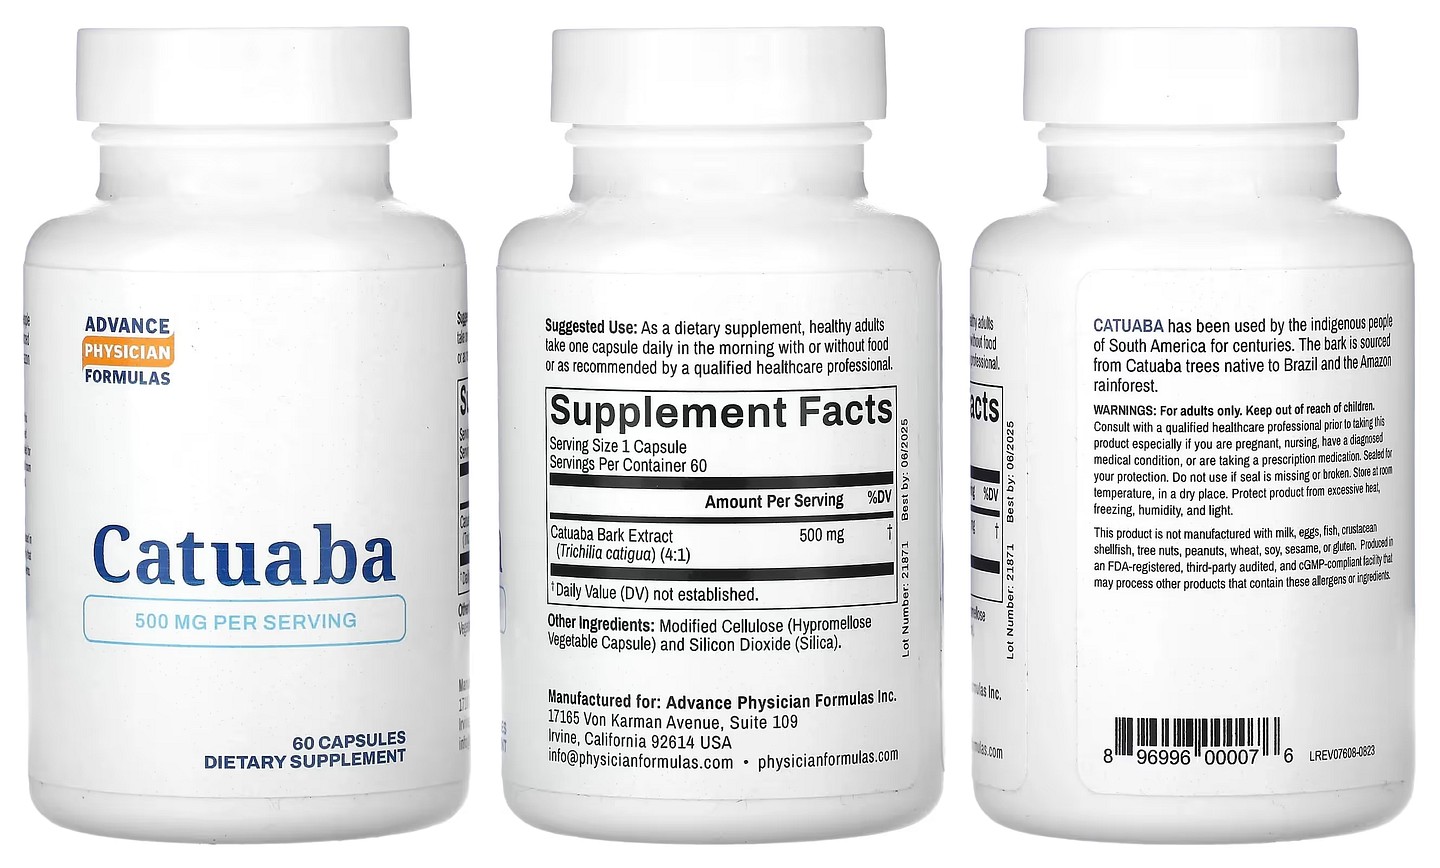 Advance Physician Formulas, Catuaba packaging